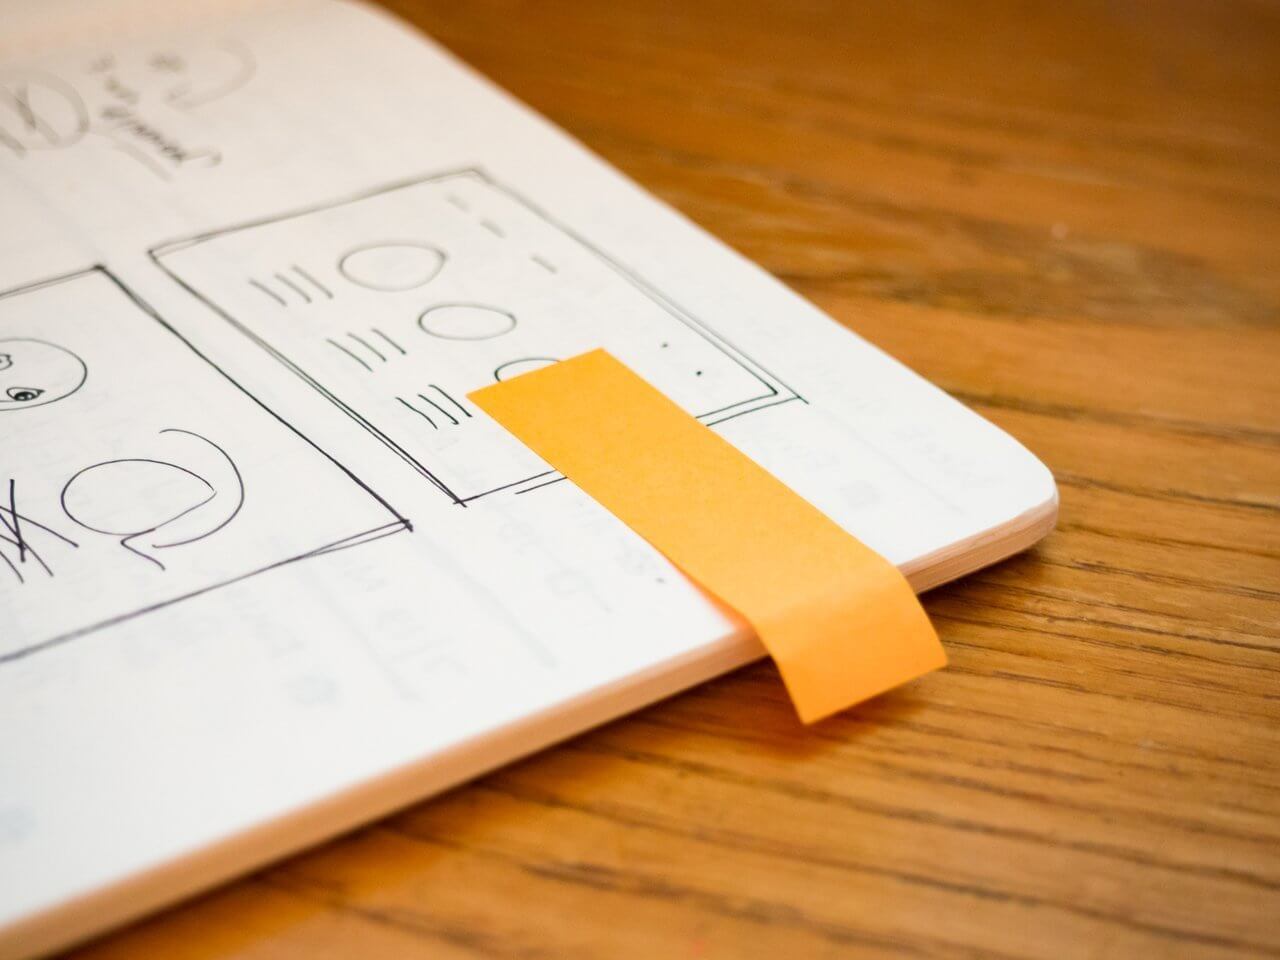 Design doodle notebook